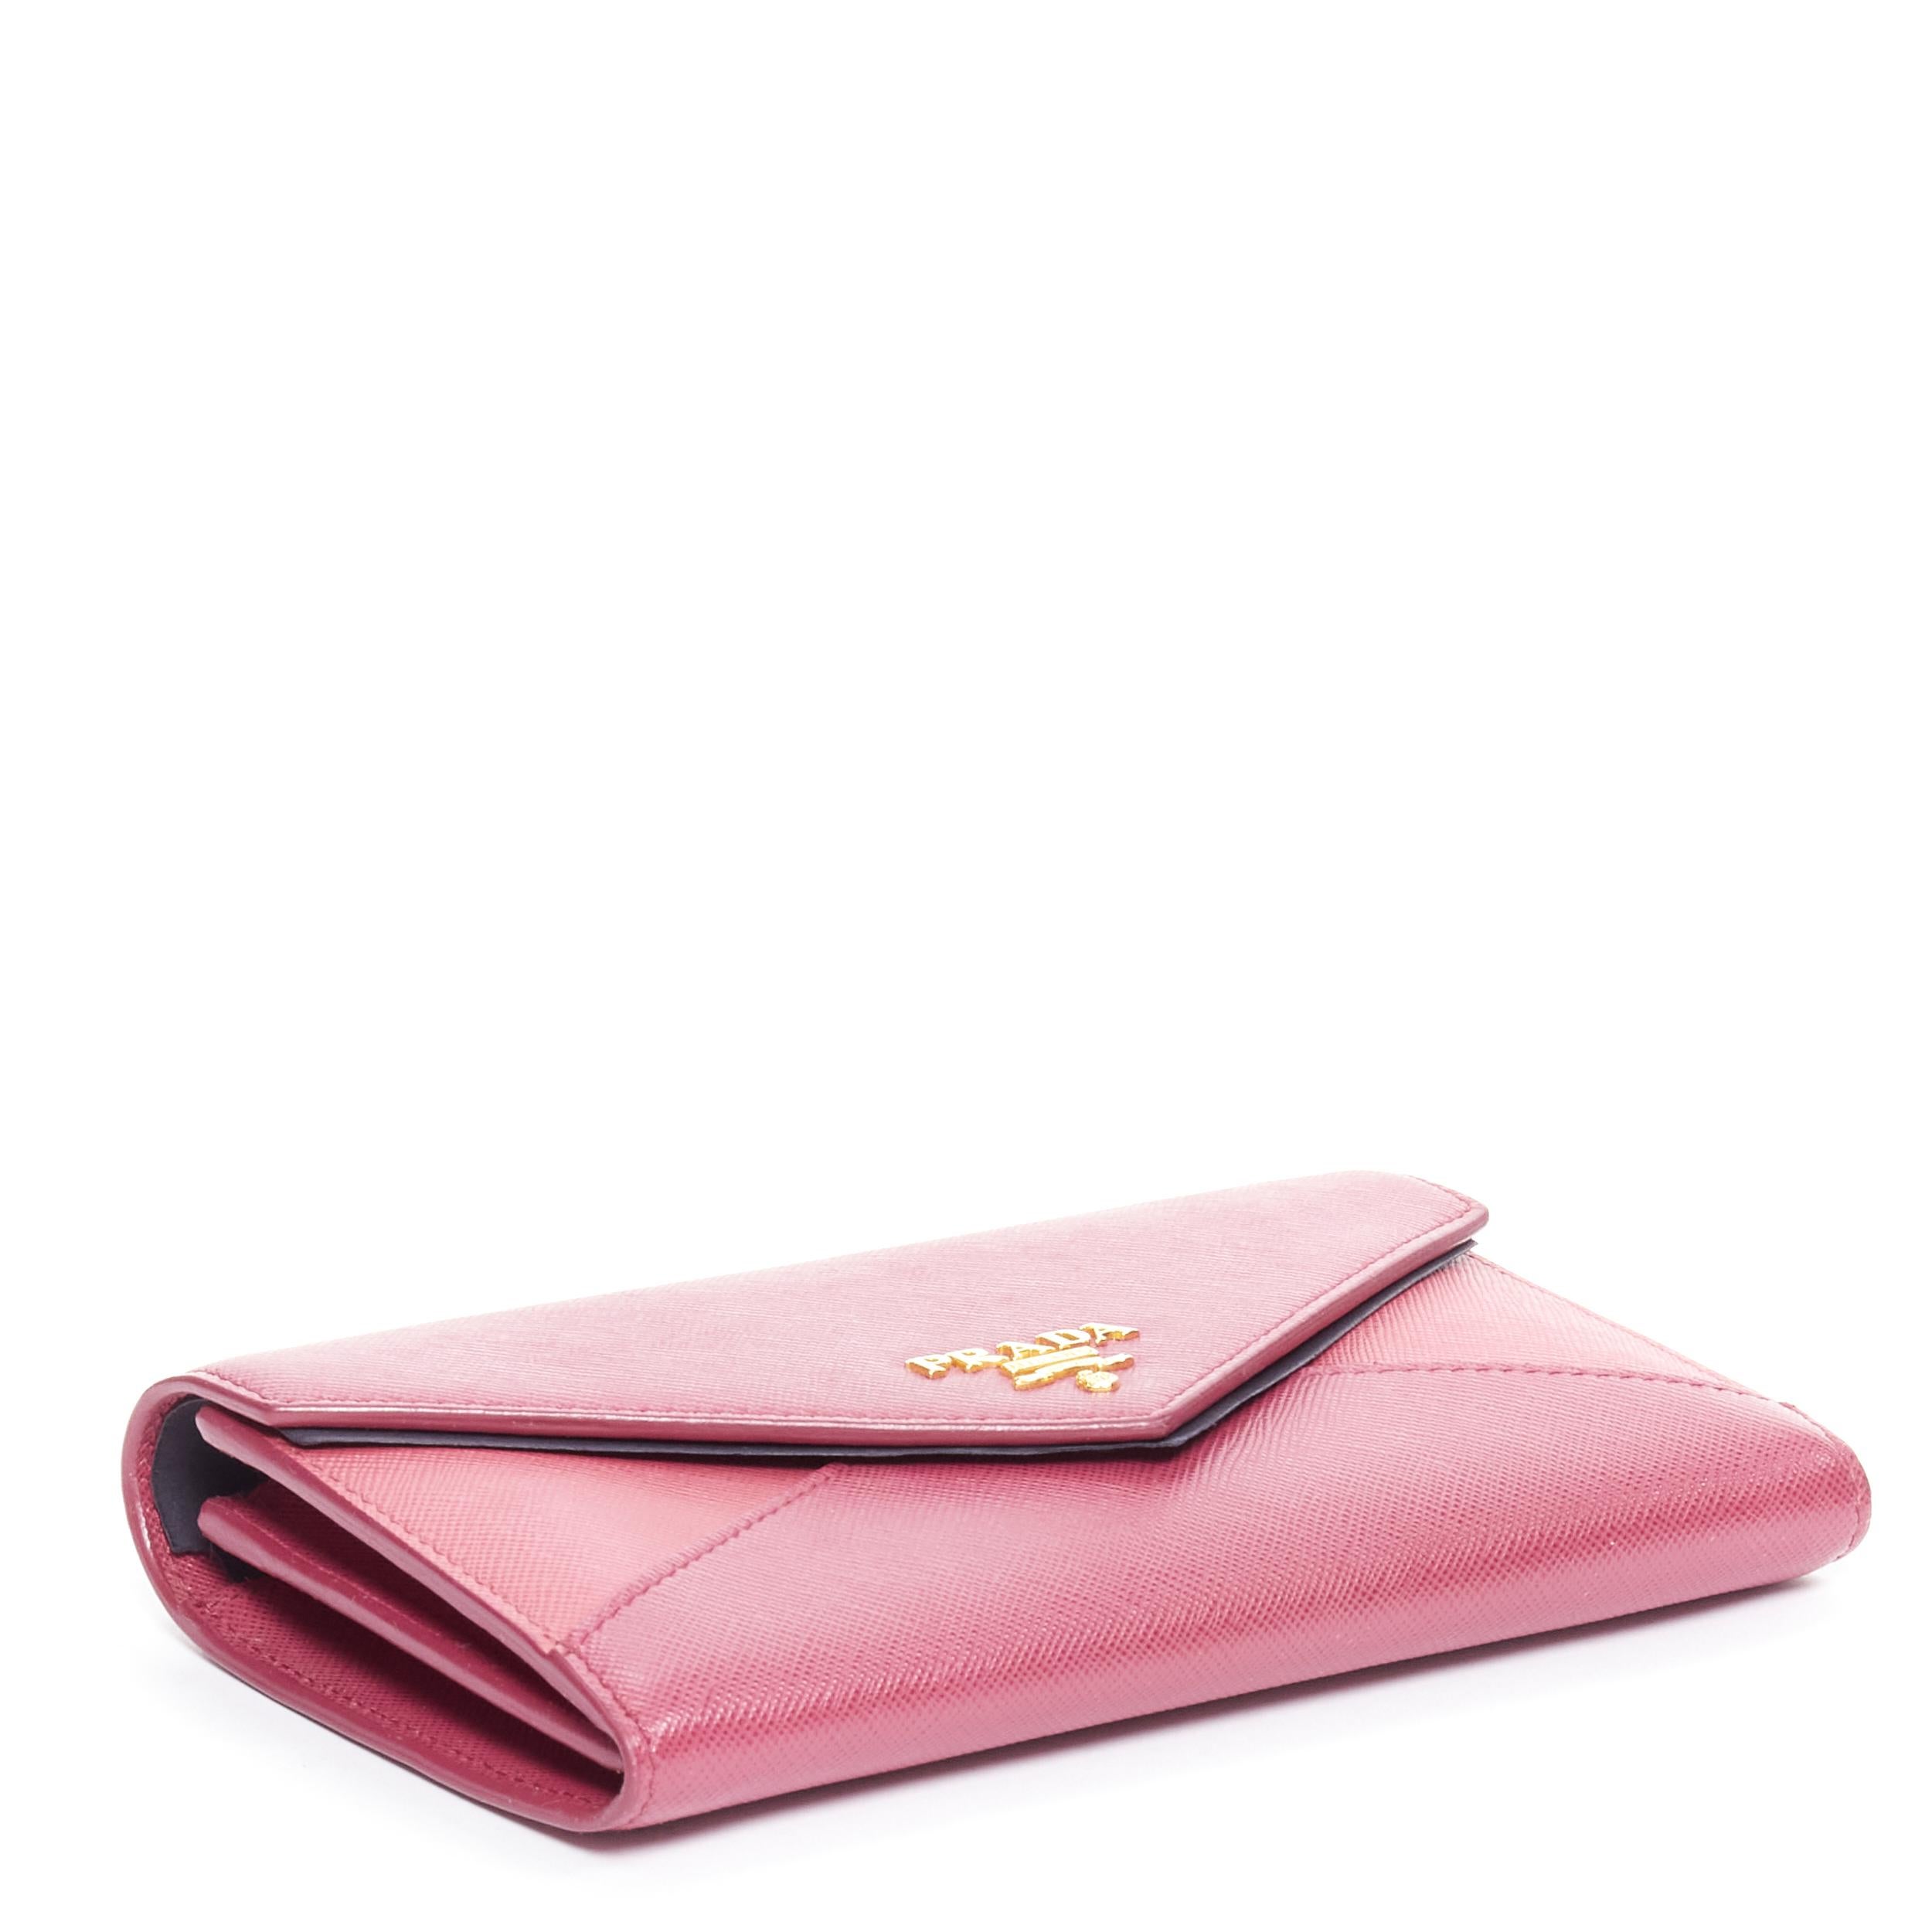 pink prada purse